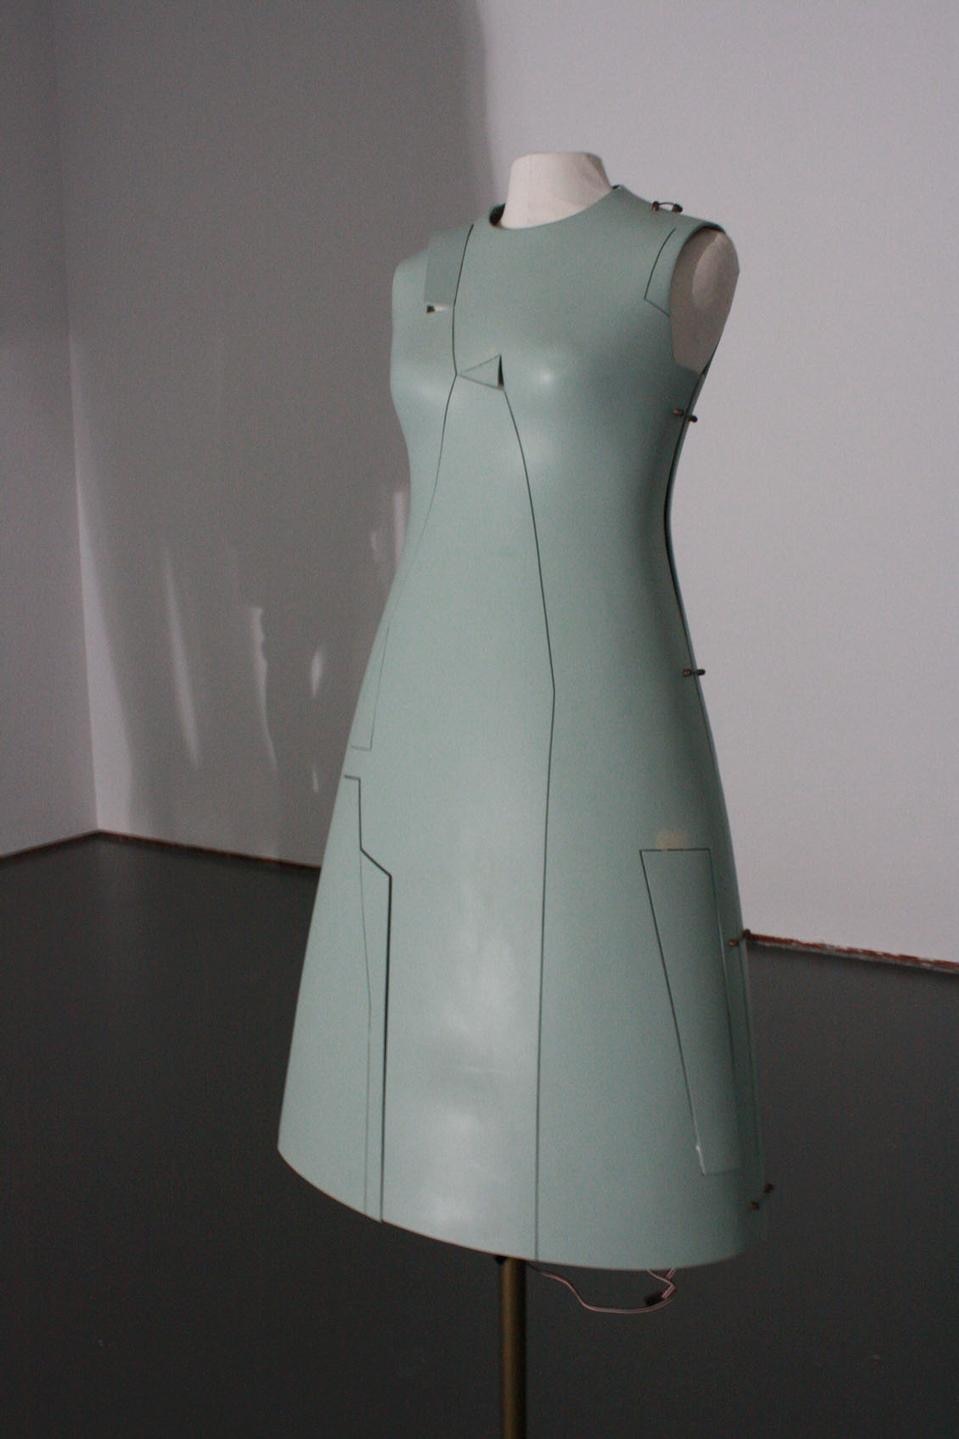 Hussein Chalayan, Remote Control Dress, 2000